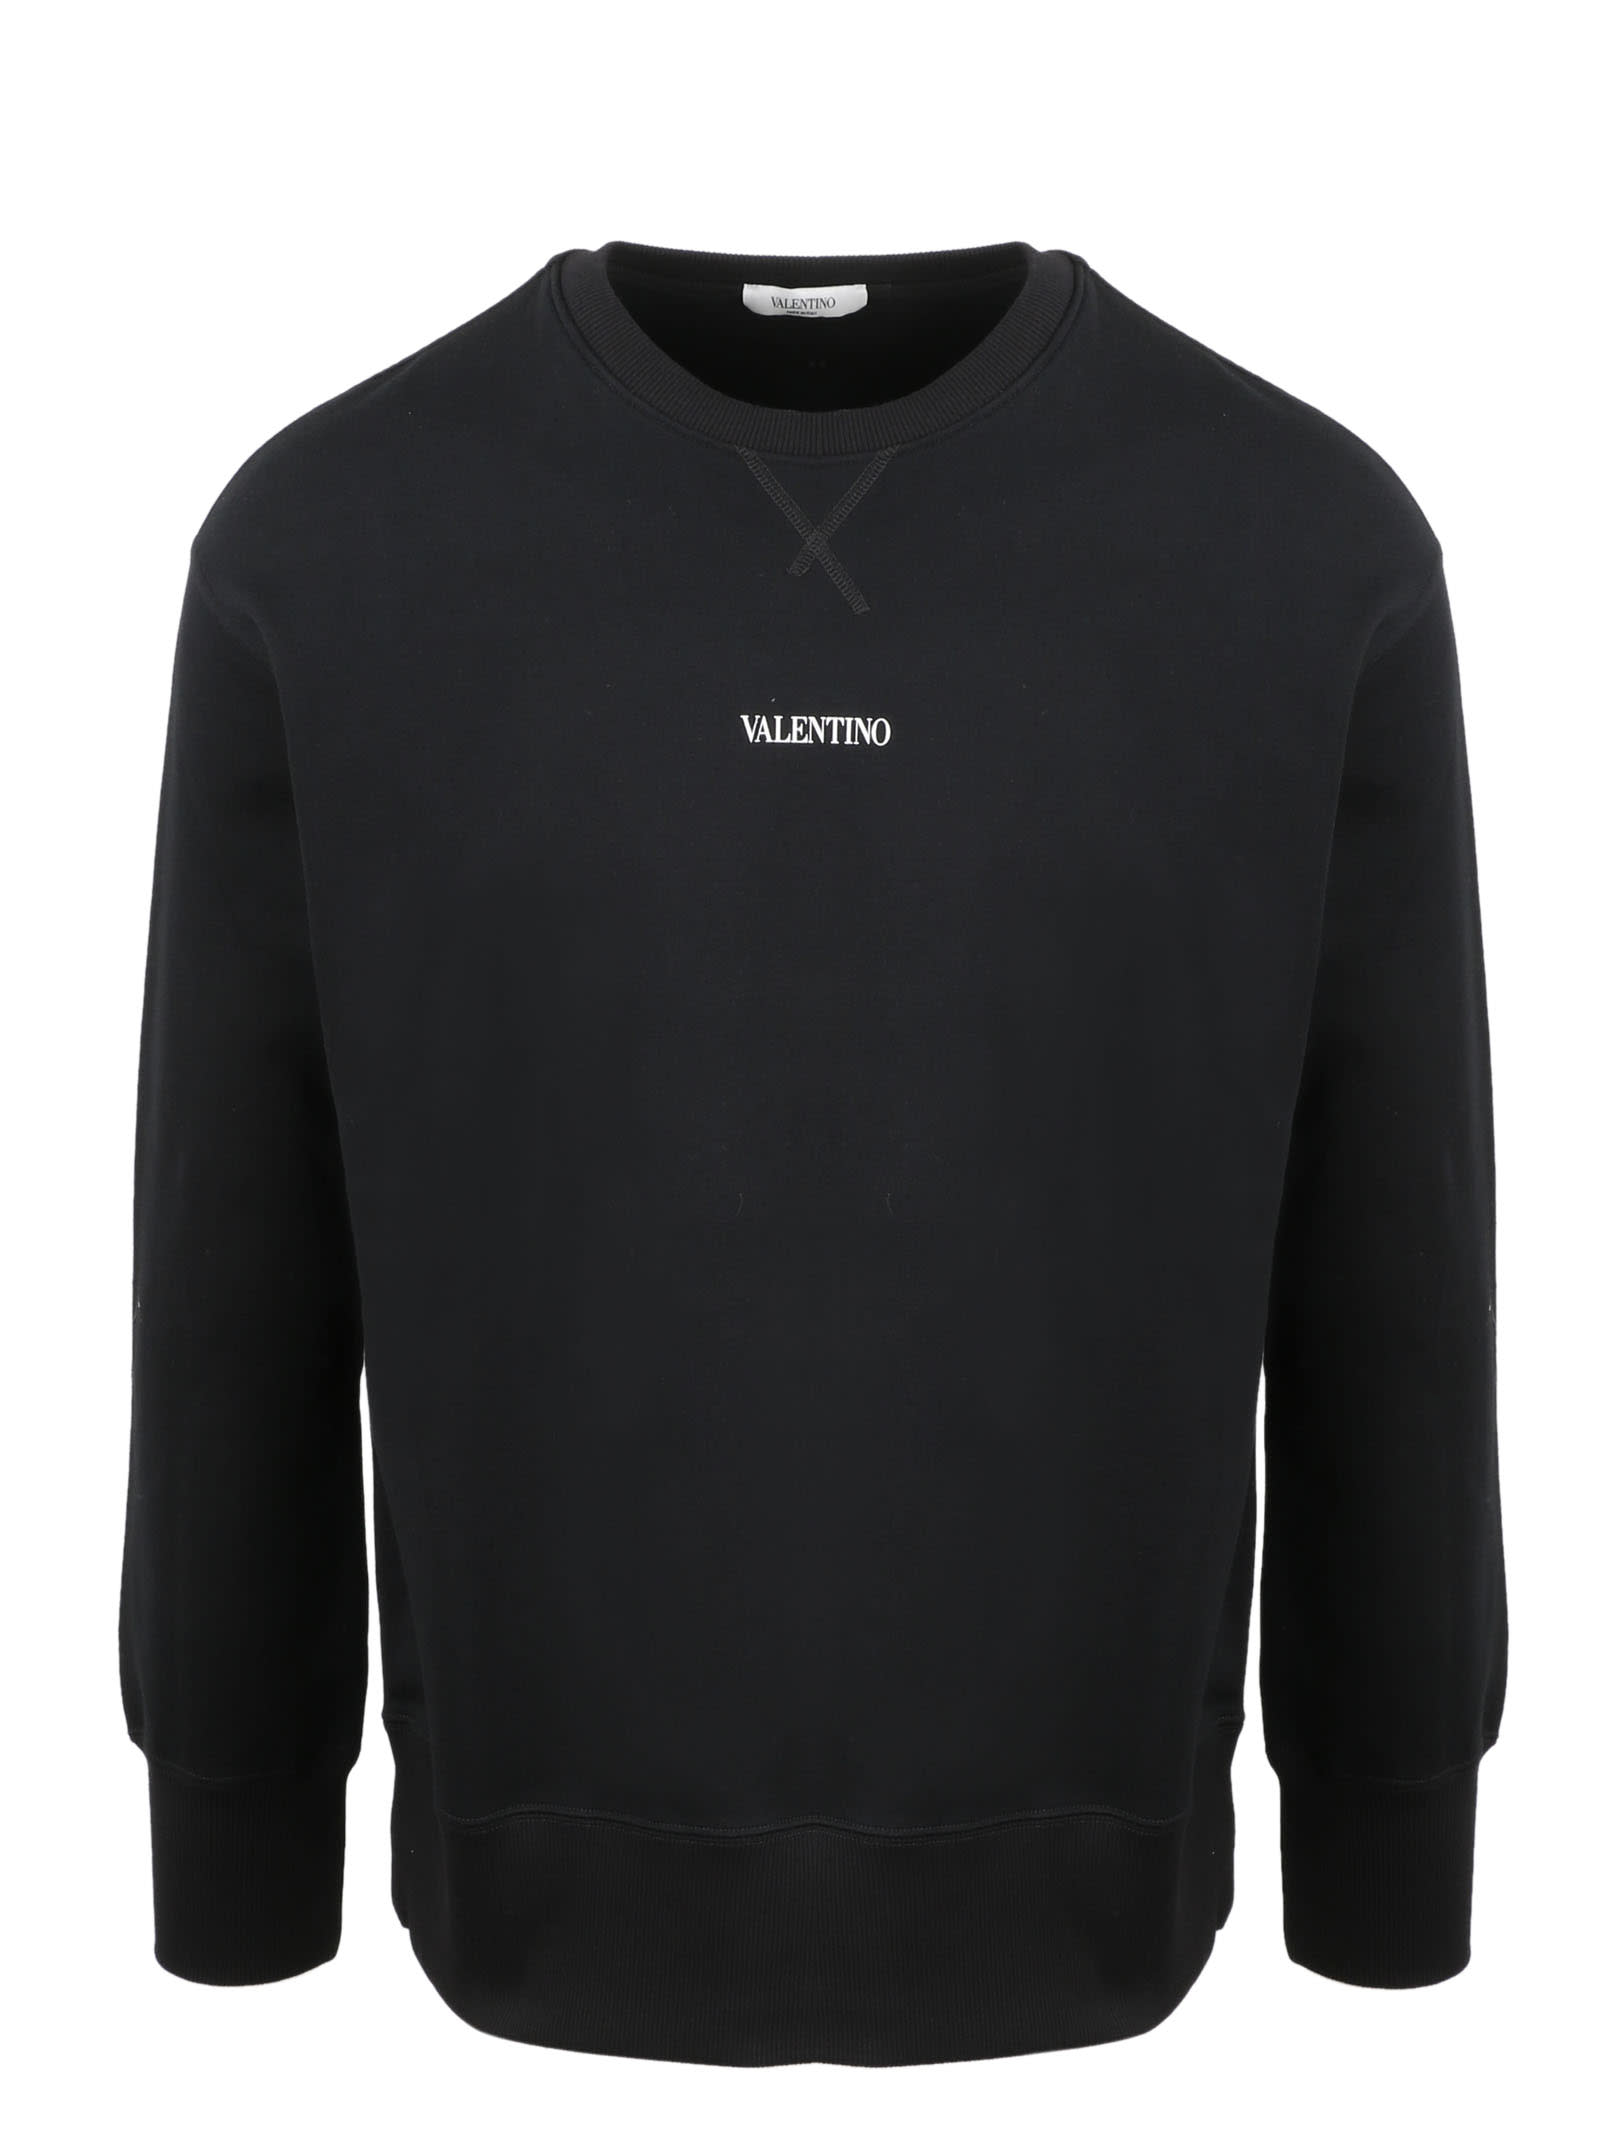 Valentino Print Sweatshirt